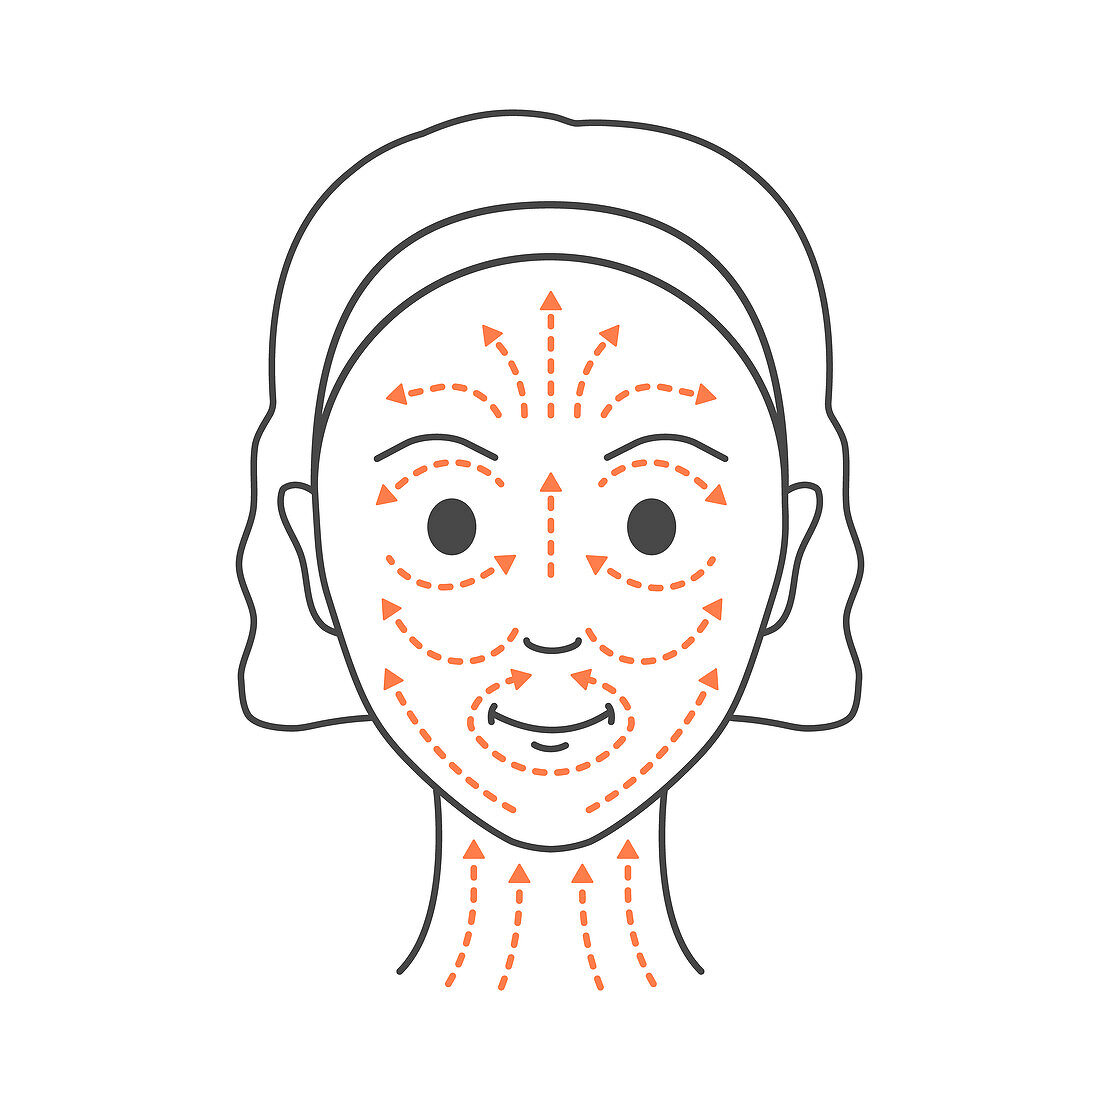 Face massage, conceptual illustration